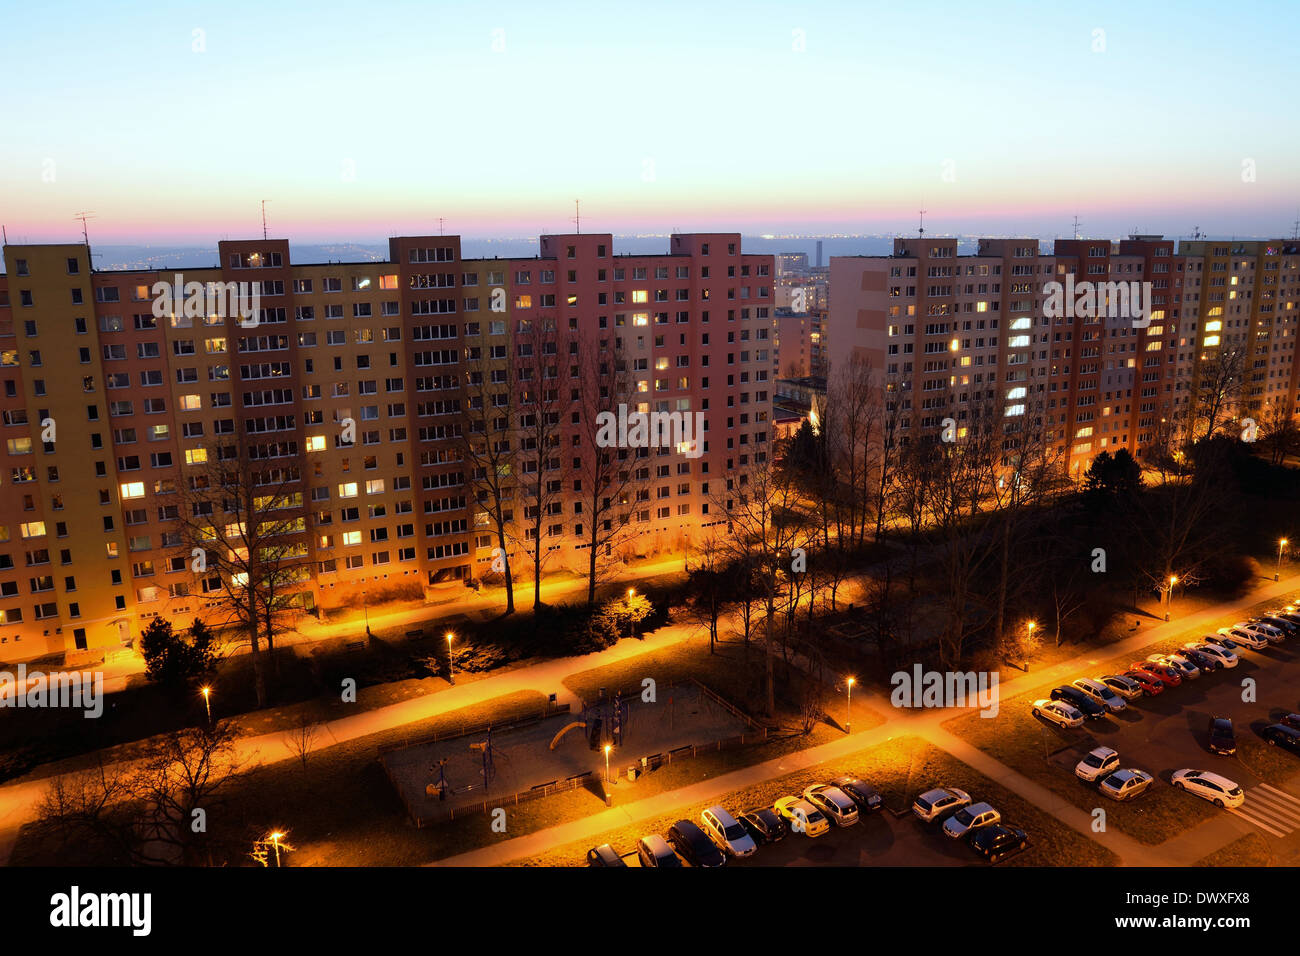 Housing development at sunset. Block of flats at night. Stock Photo